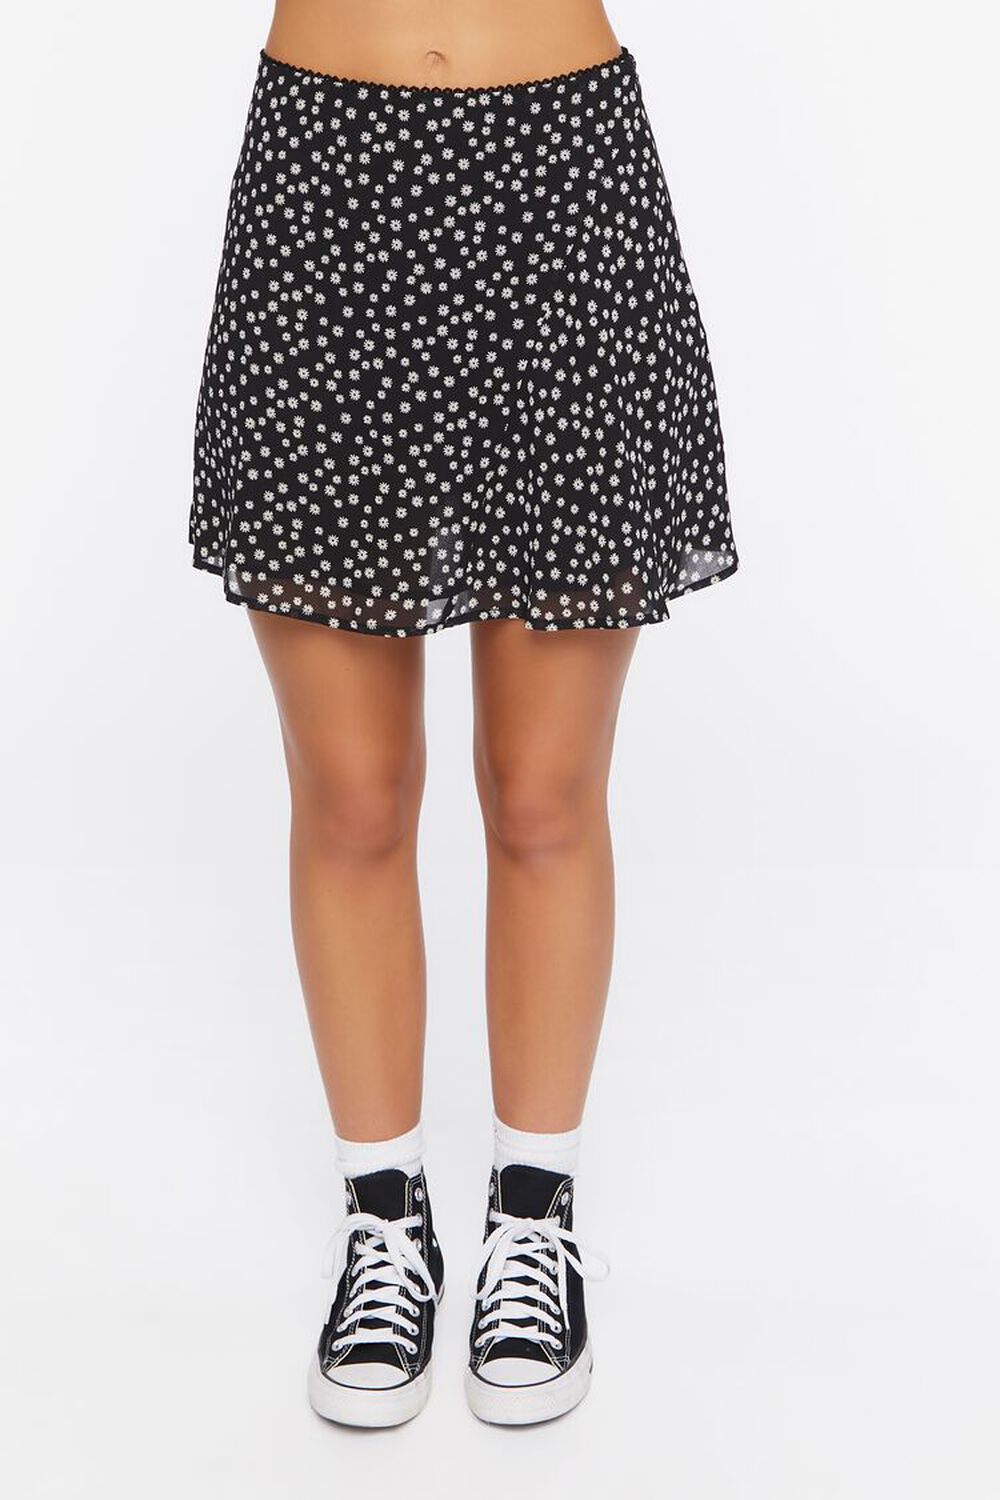 BLACK/WHITE Ditsy Floral Print Mini Skirt, image 2